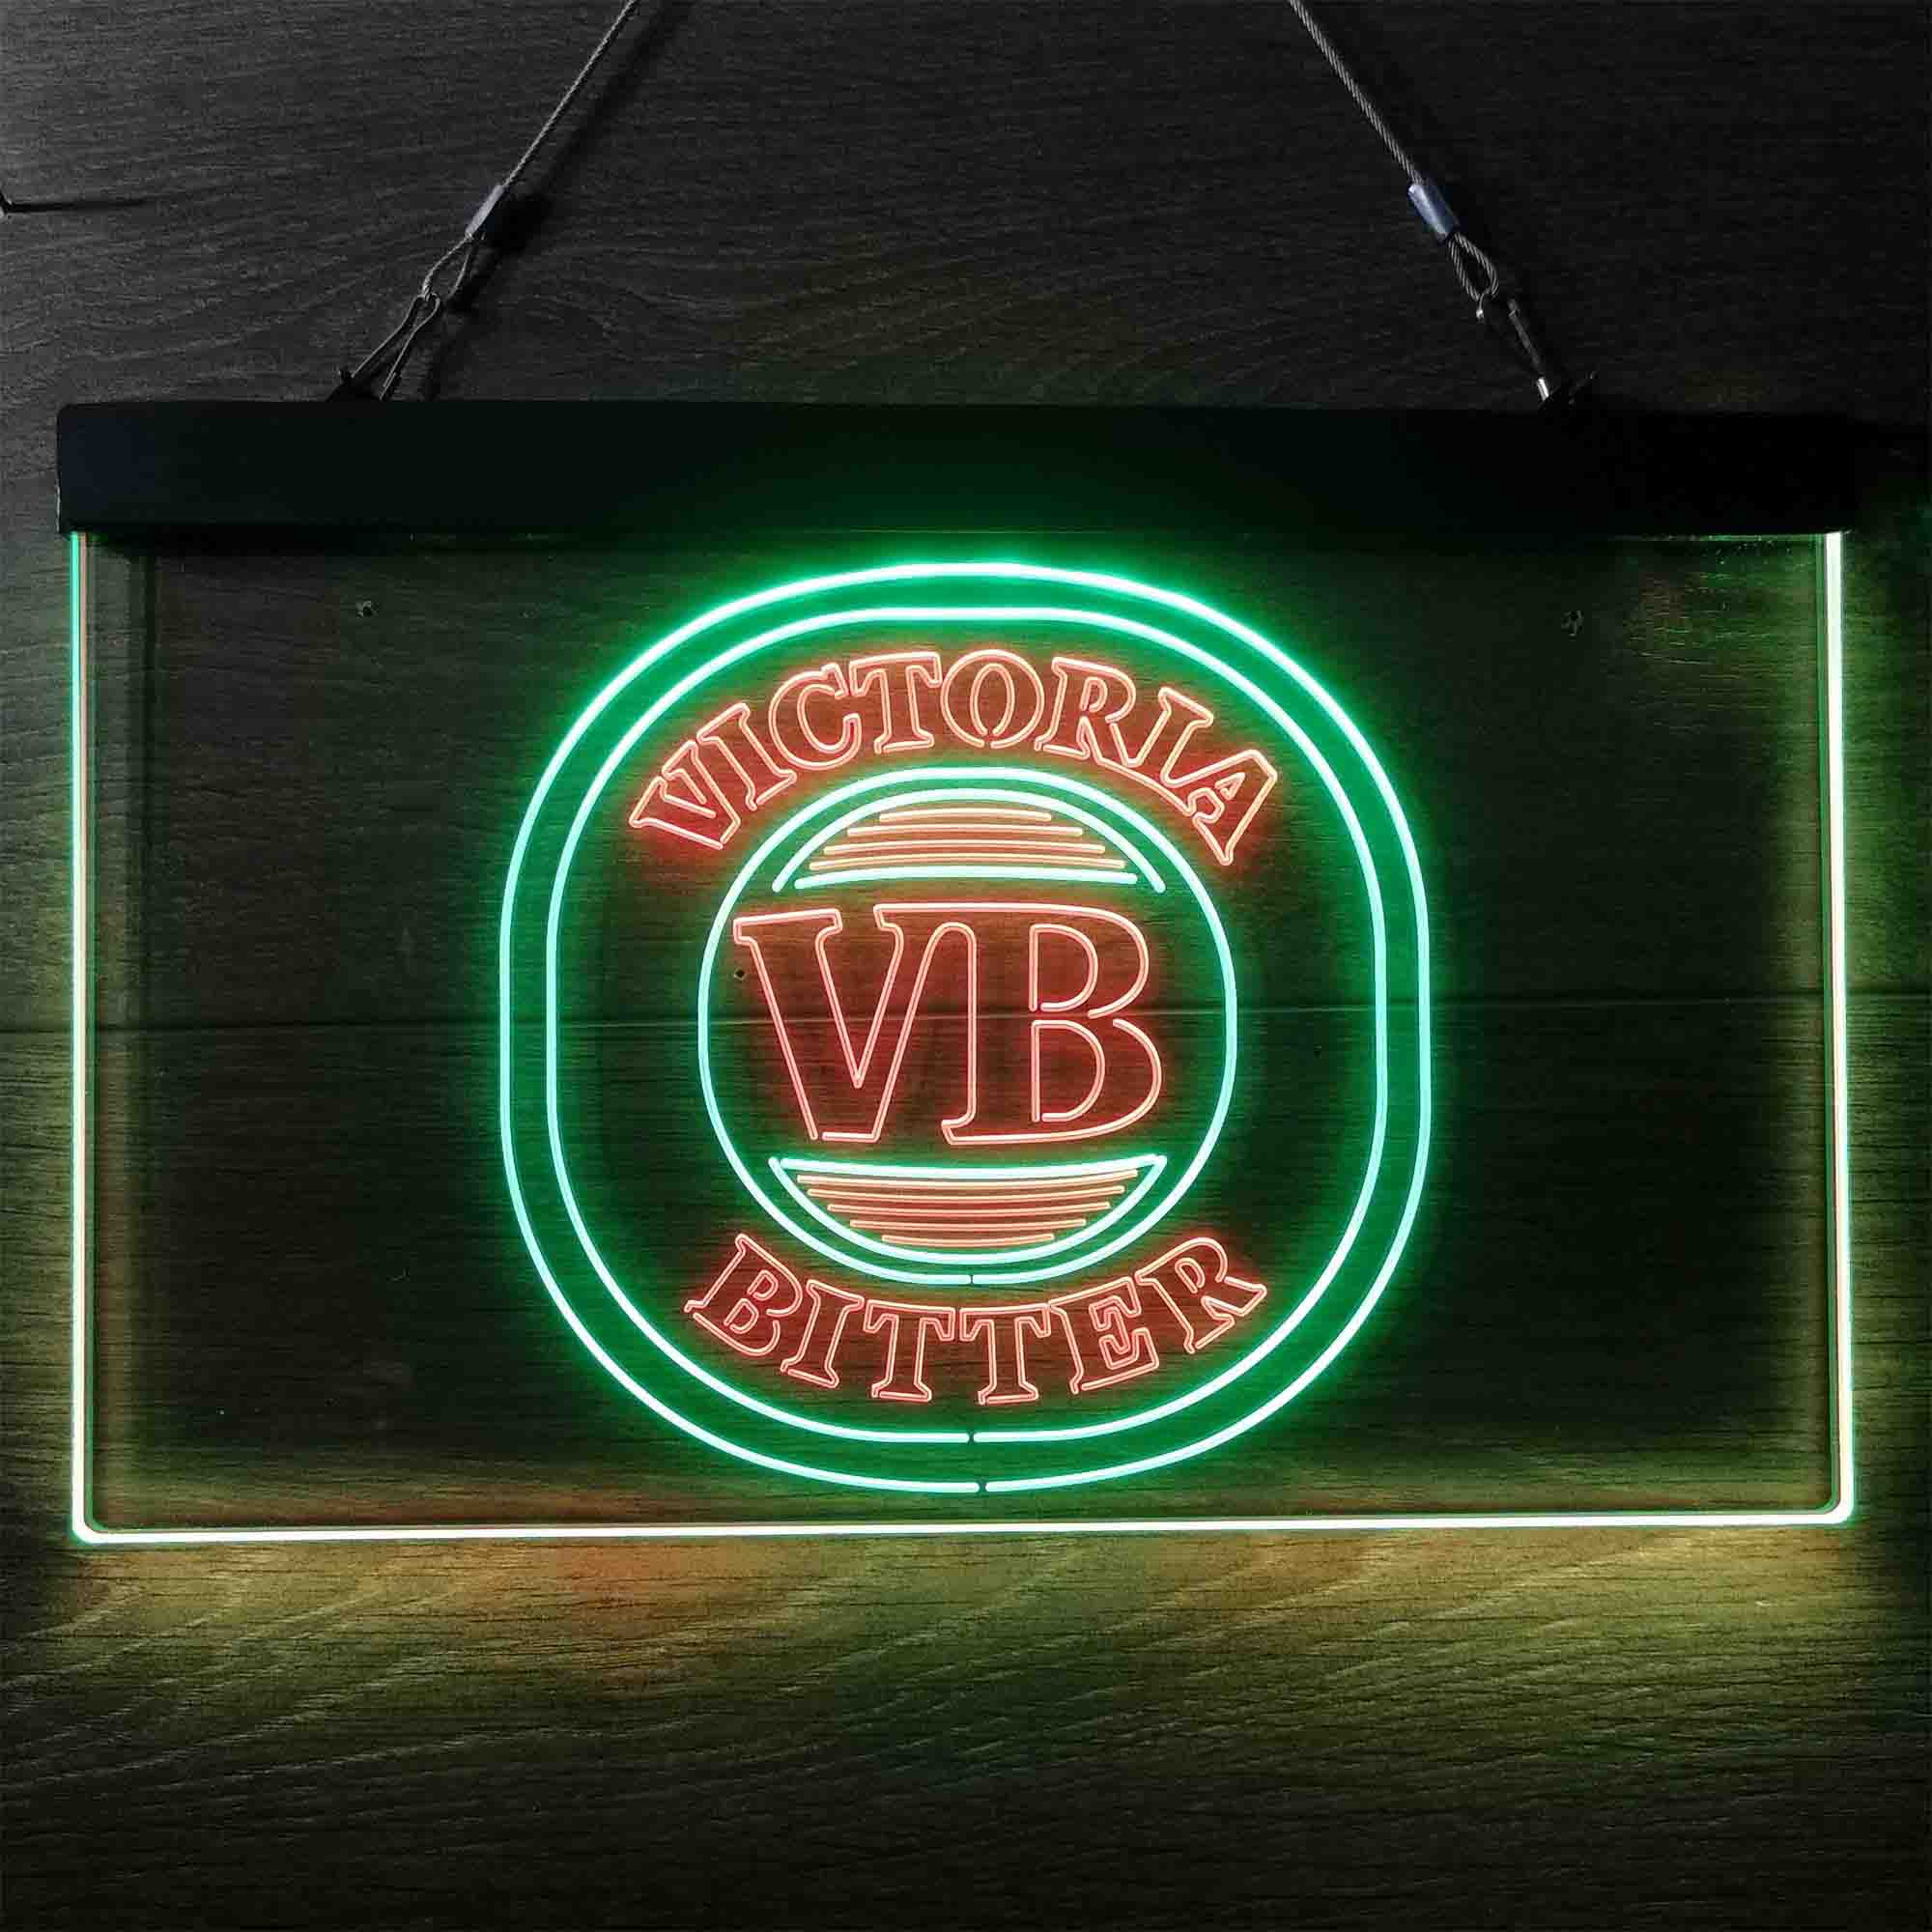 Victoria Bitter VB Beer Neon-Like LED Sign